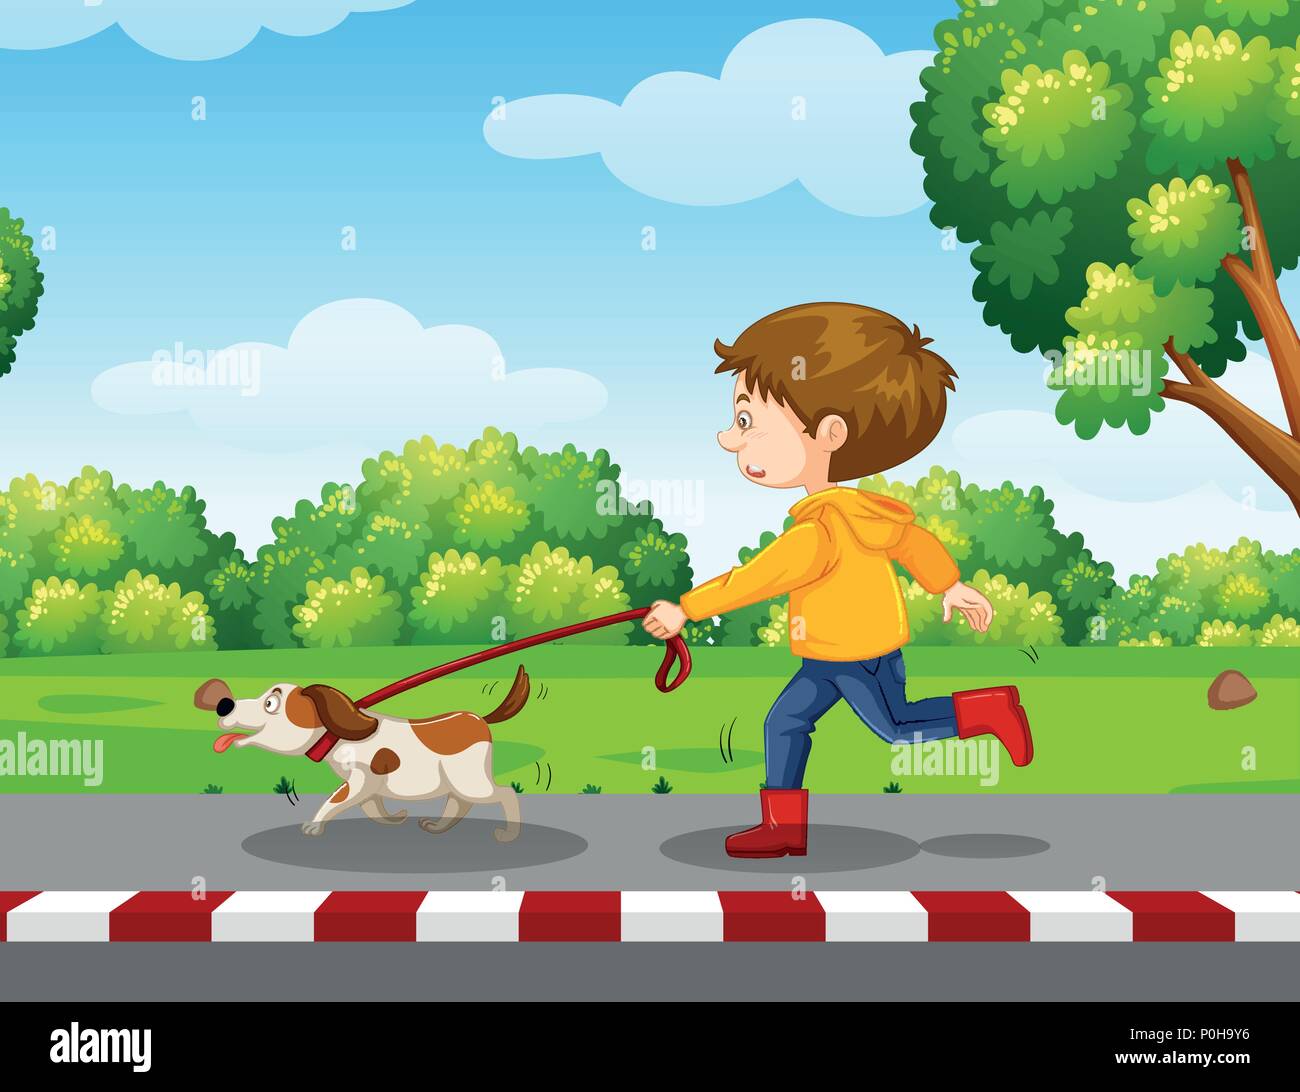 young boy walking a dog illustration Stock Vector